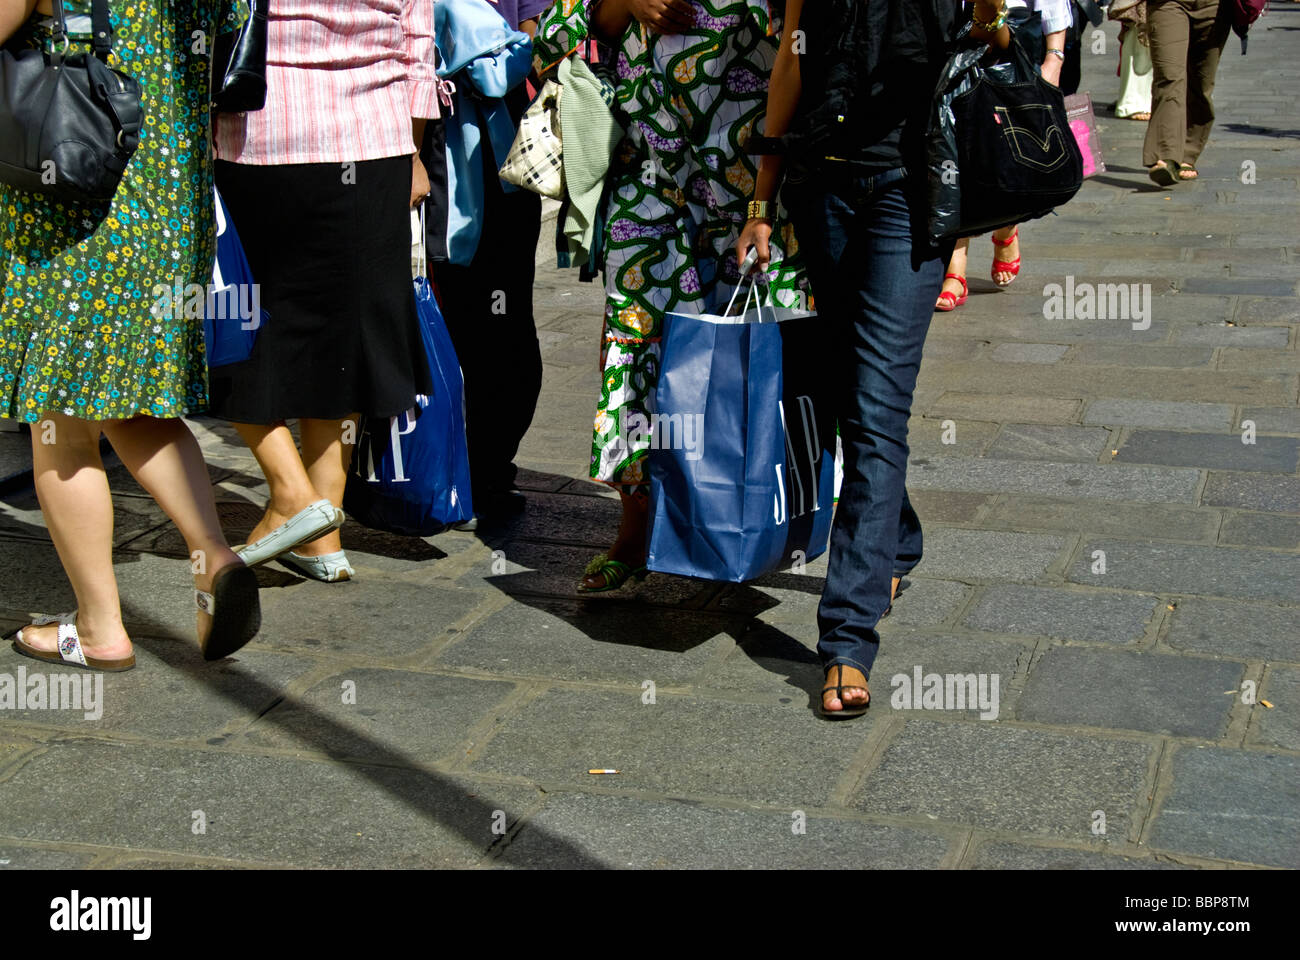 Paris France, Shopping, Detail, Medium Crowd People, Female Legs, Women Walking, Carrying 'Shopping Bags', street fashion shoes,  tourism fashion Stock Photo